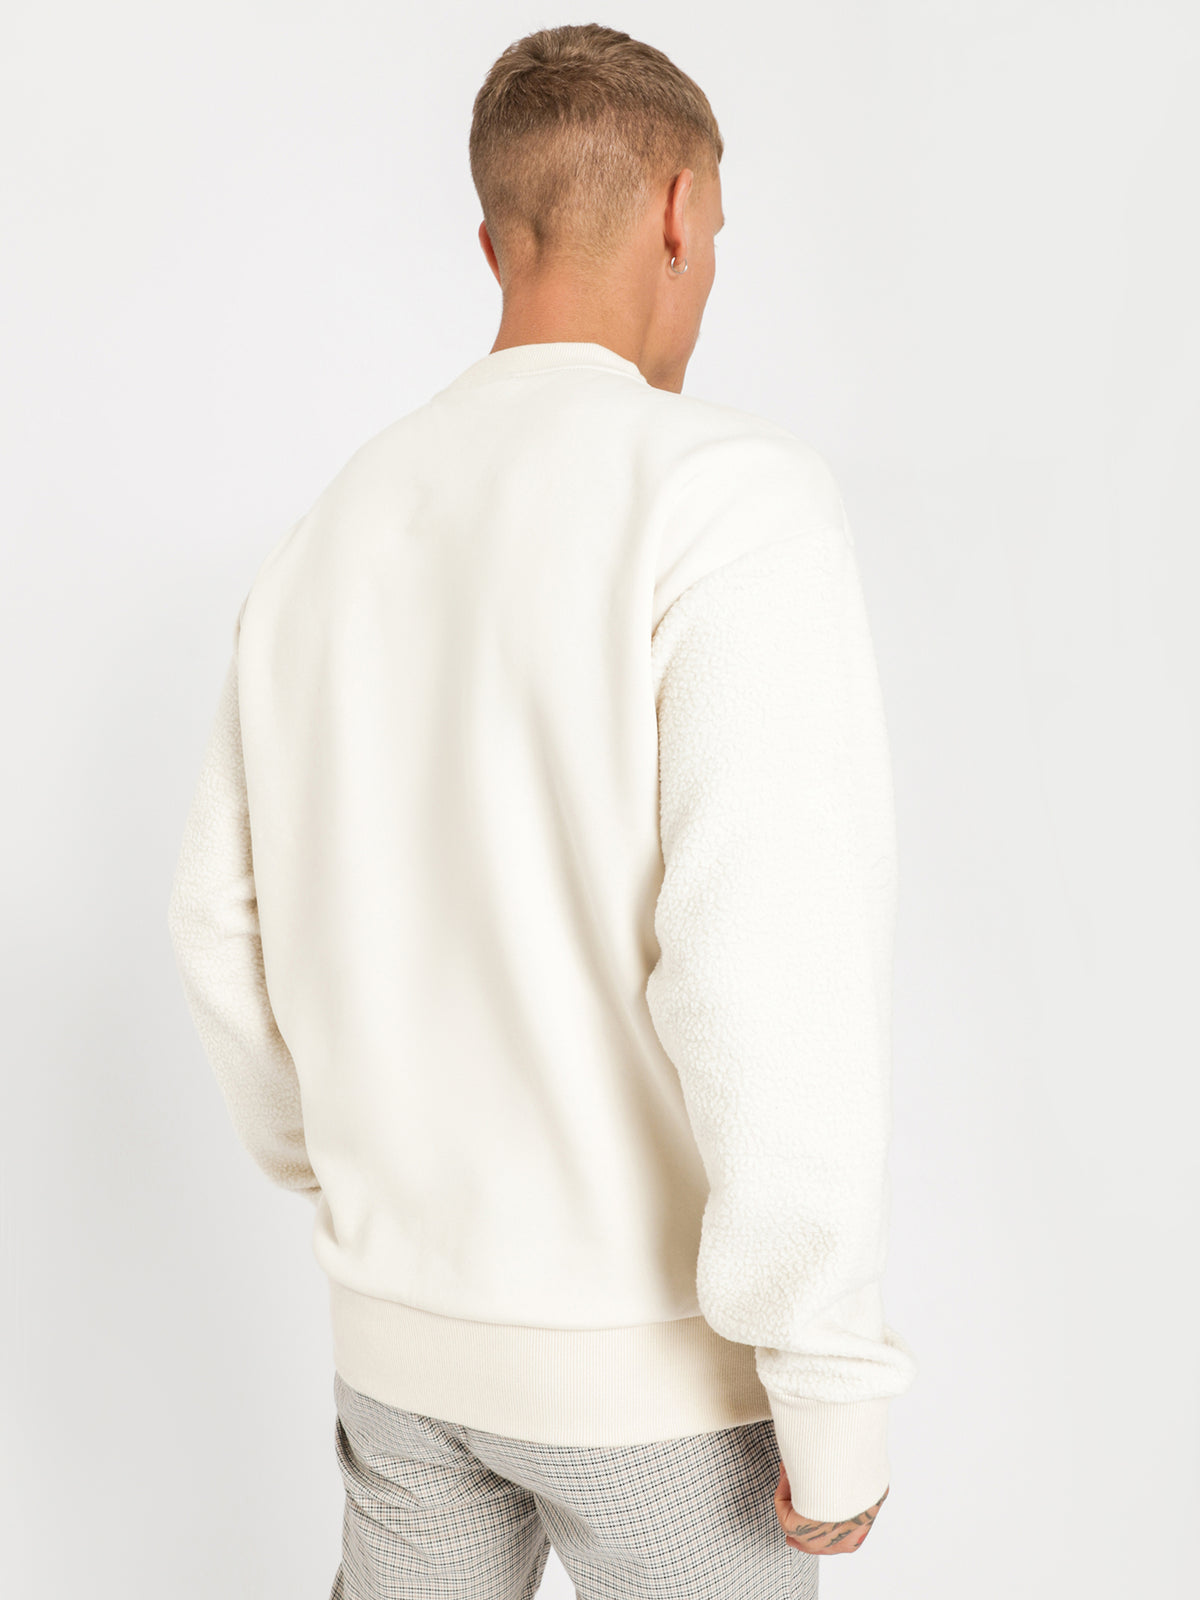 Tase Crew Sweater in Whitecap Gray